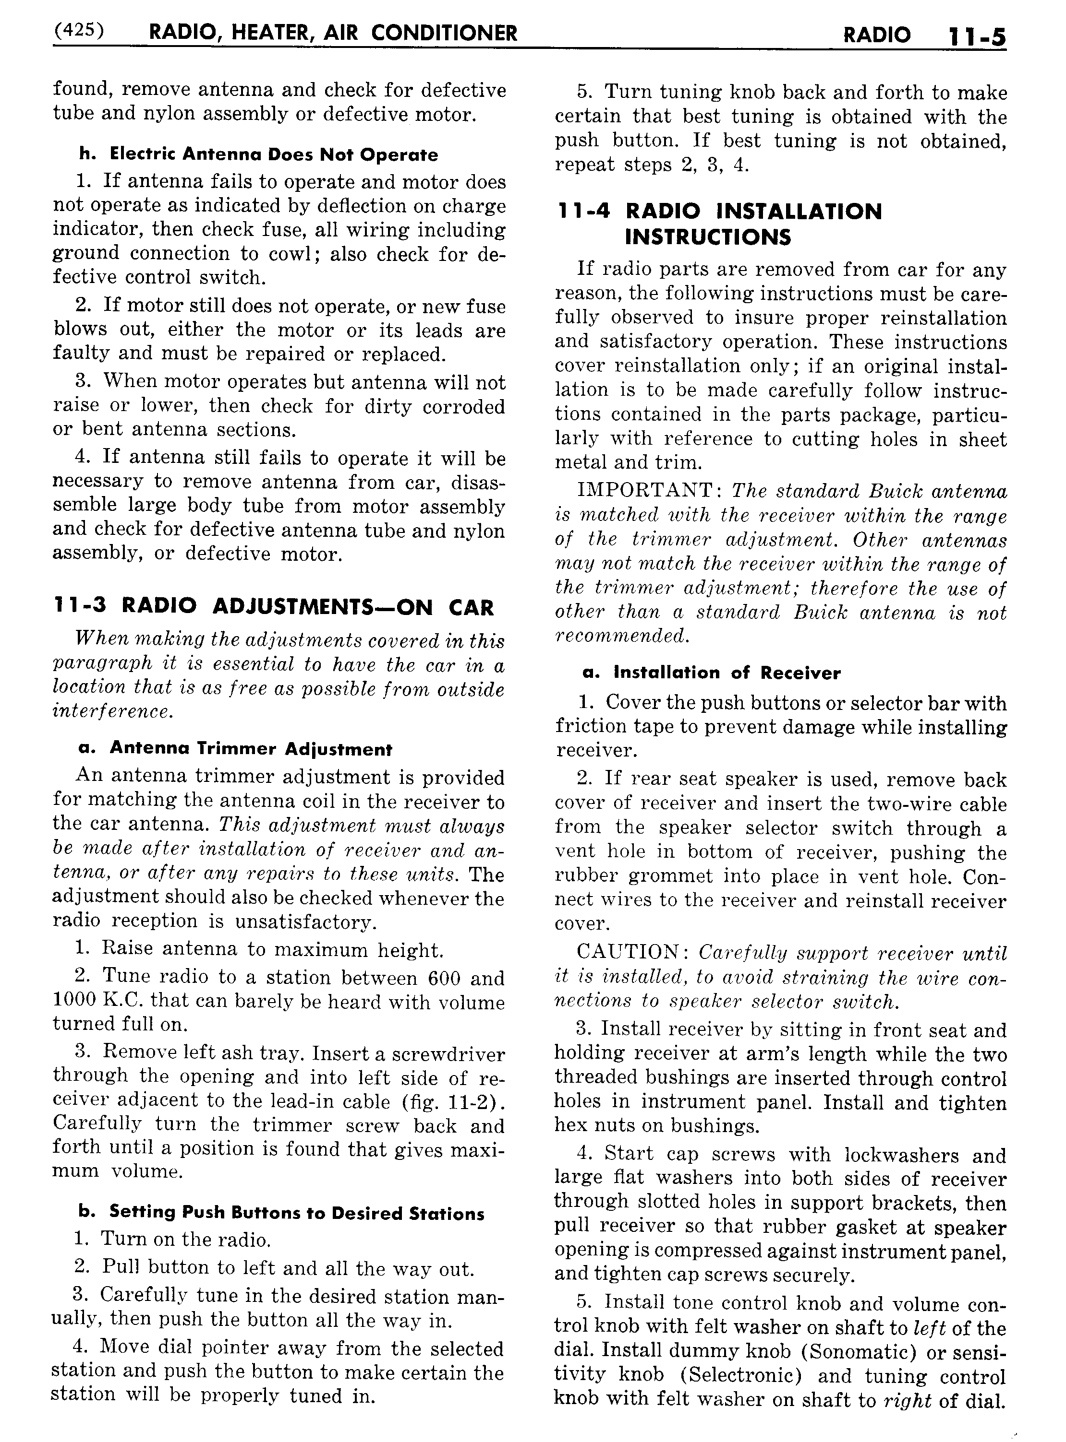 n_12 1956 Buick Shop Manual - Radio-Heater-AC-005-005.jpg